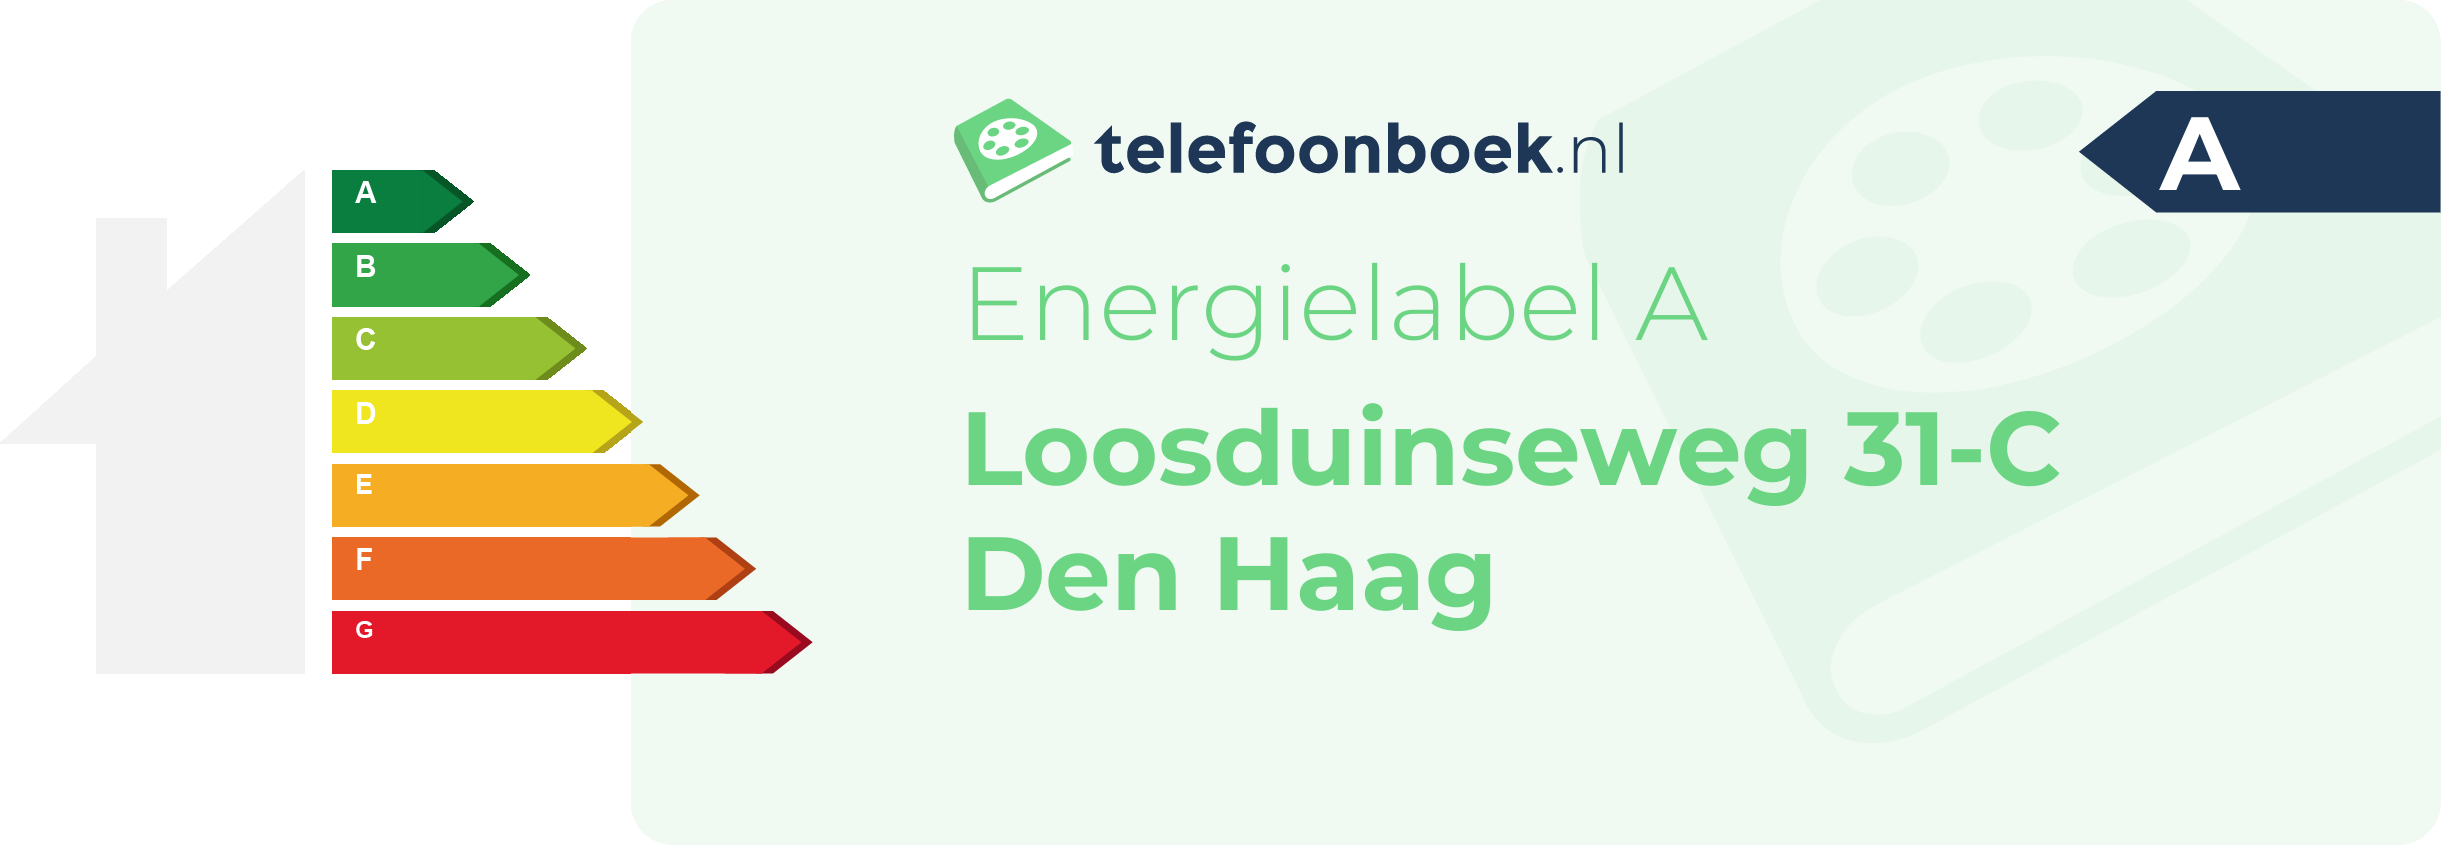 Energielabel Loosduinseweg 31-C Den Haag